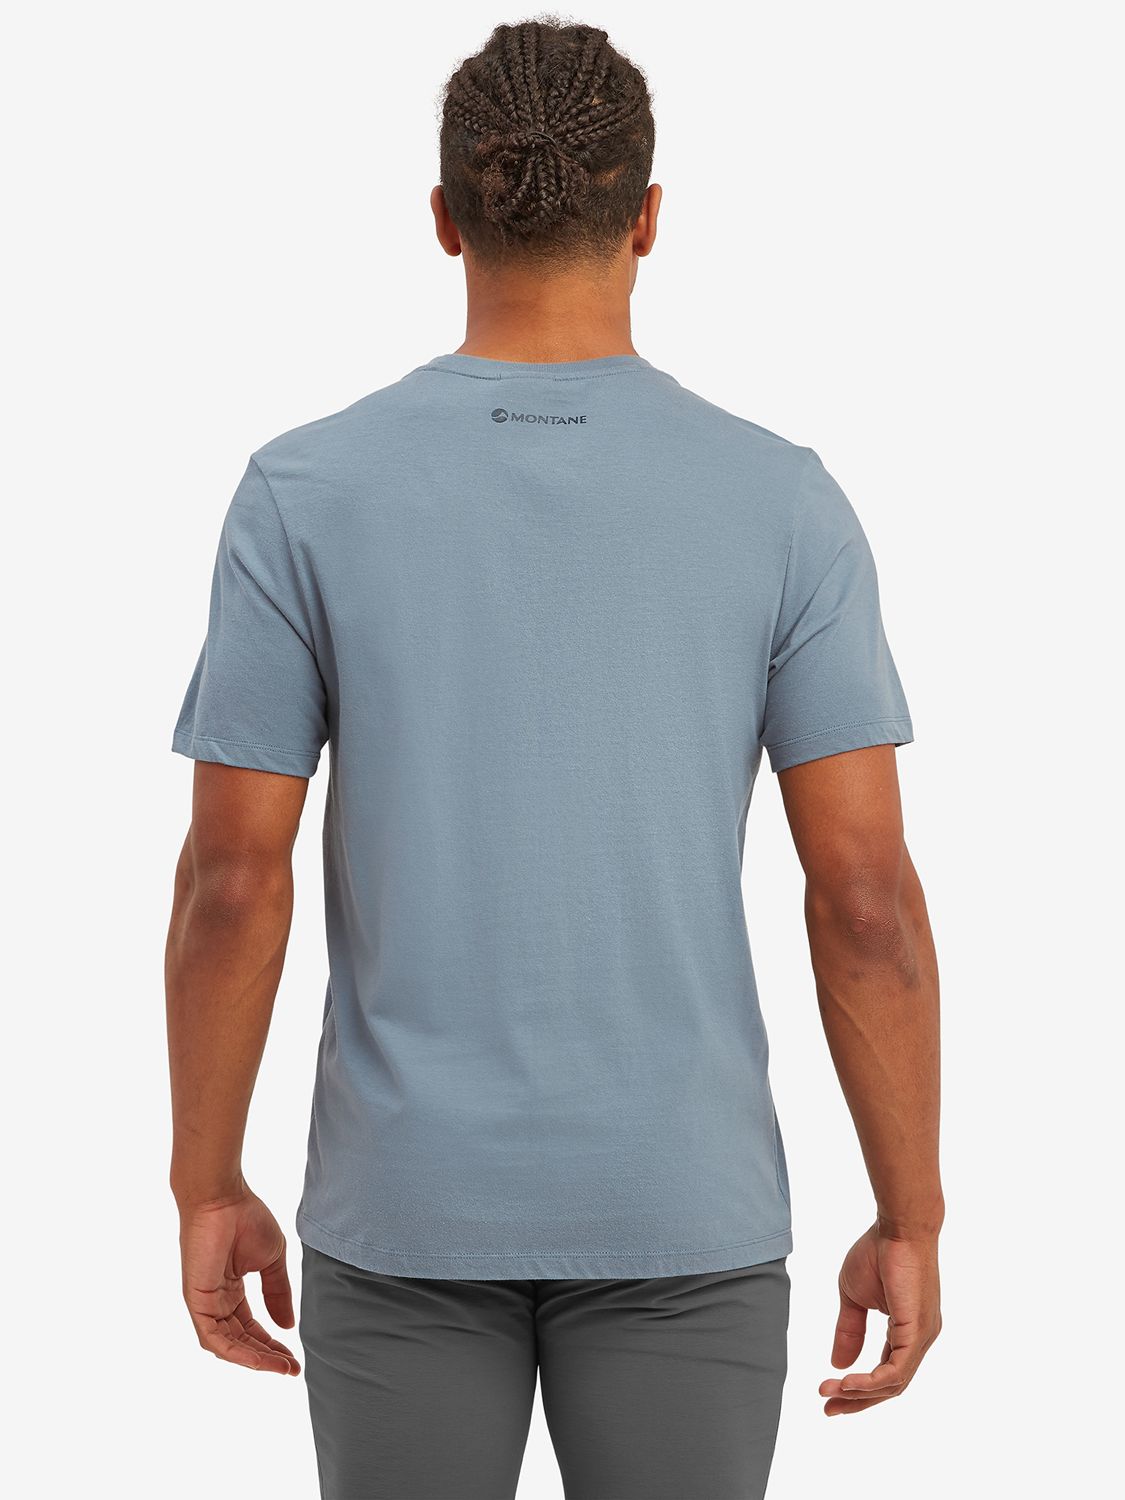 Montane Abstract Mountain Organic Cotton T-Shirt, Stone Blue, XS